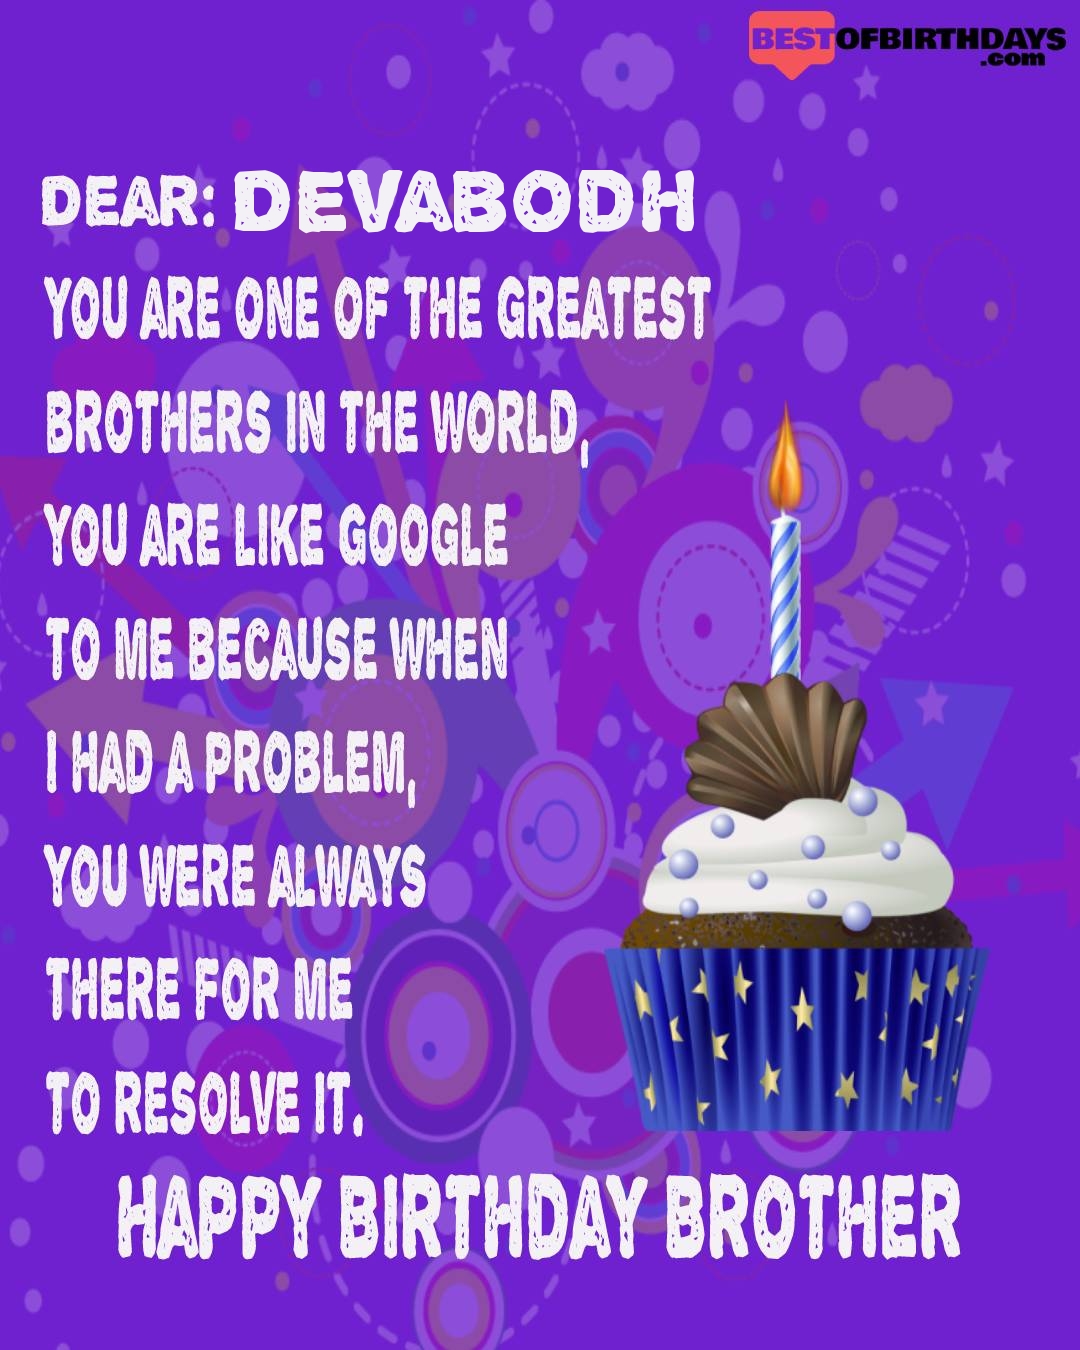 Happy birthday devabodh bhai brother bro